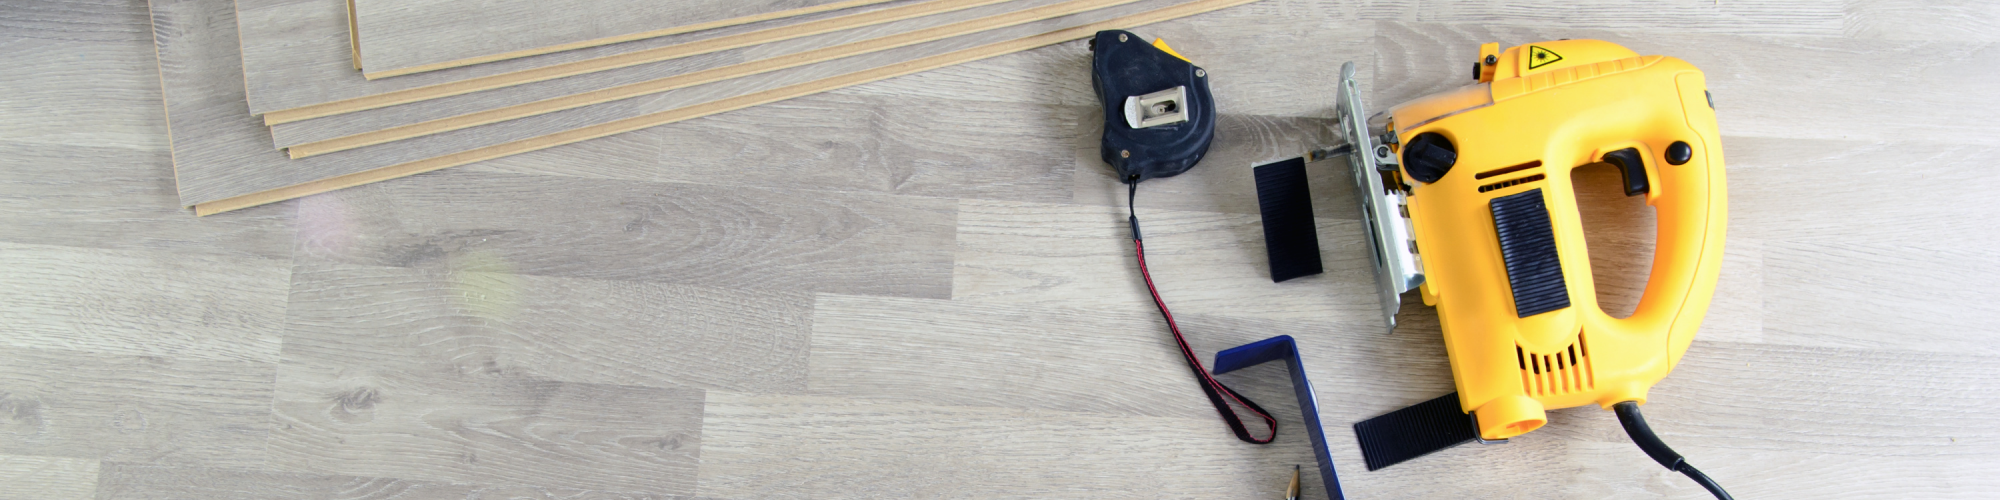 Preparing for flooring installation? See our installation checklist from Carpet Spectrum